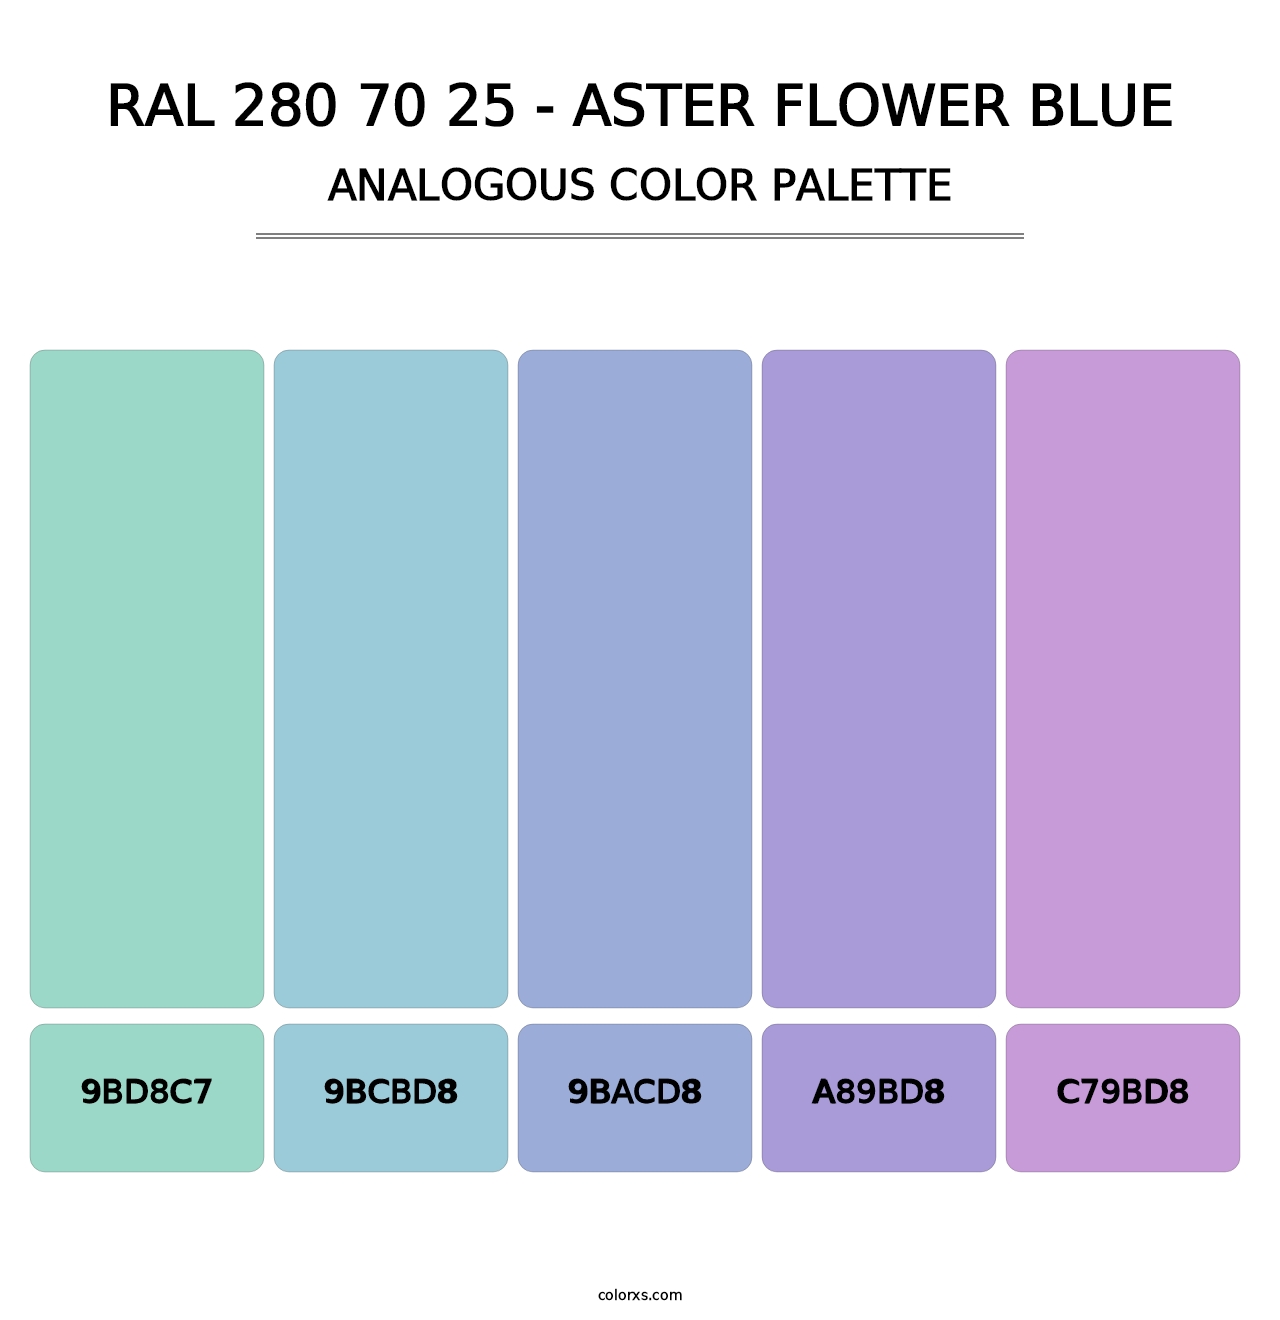 RAL 280 70 25 - Aster Flower Blue - Analogous Color Palette